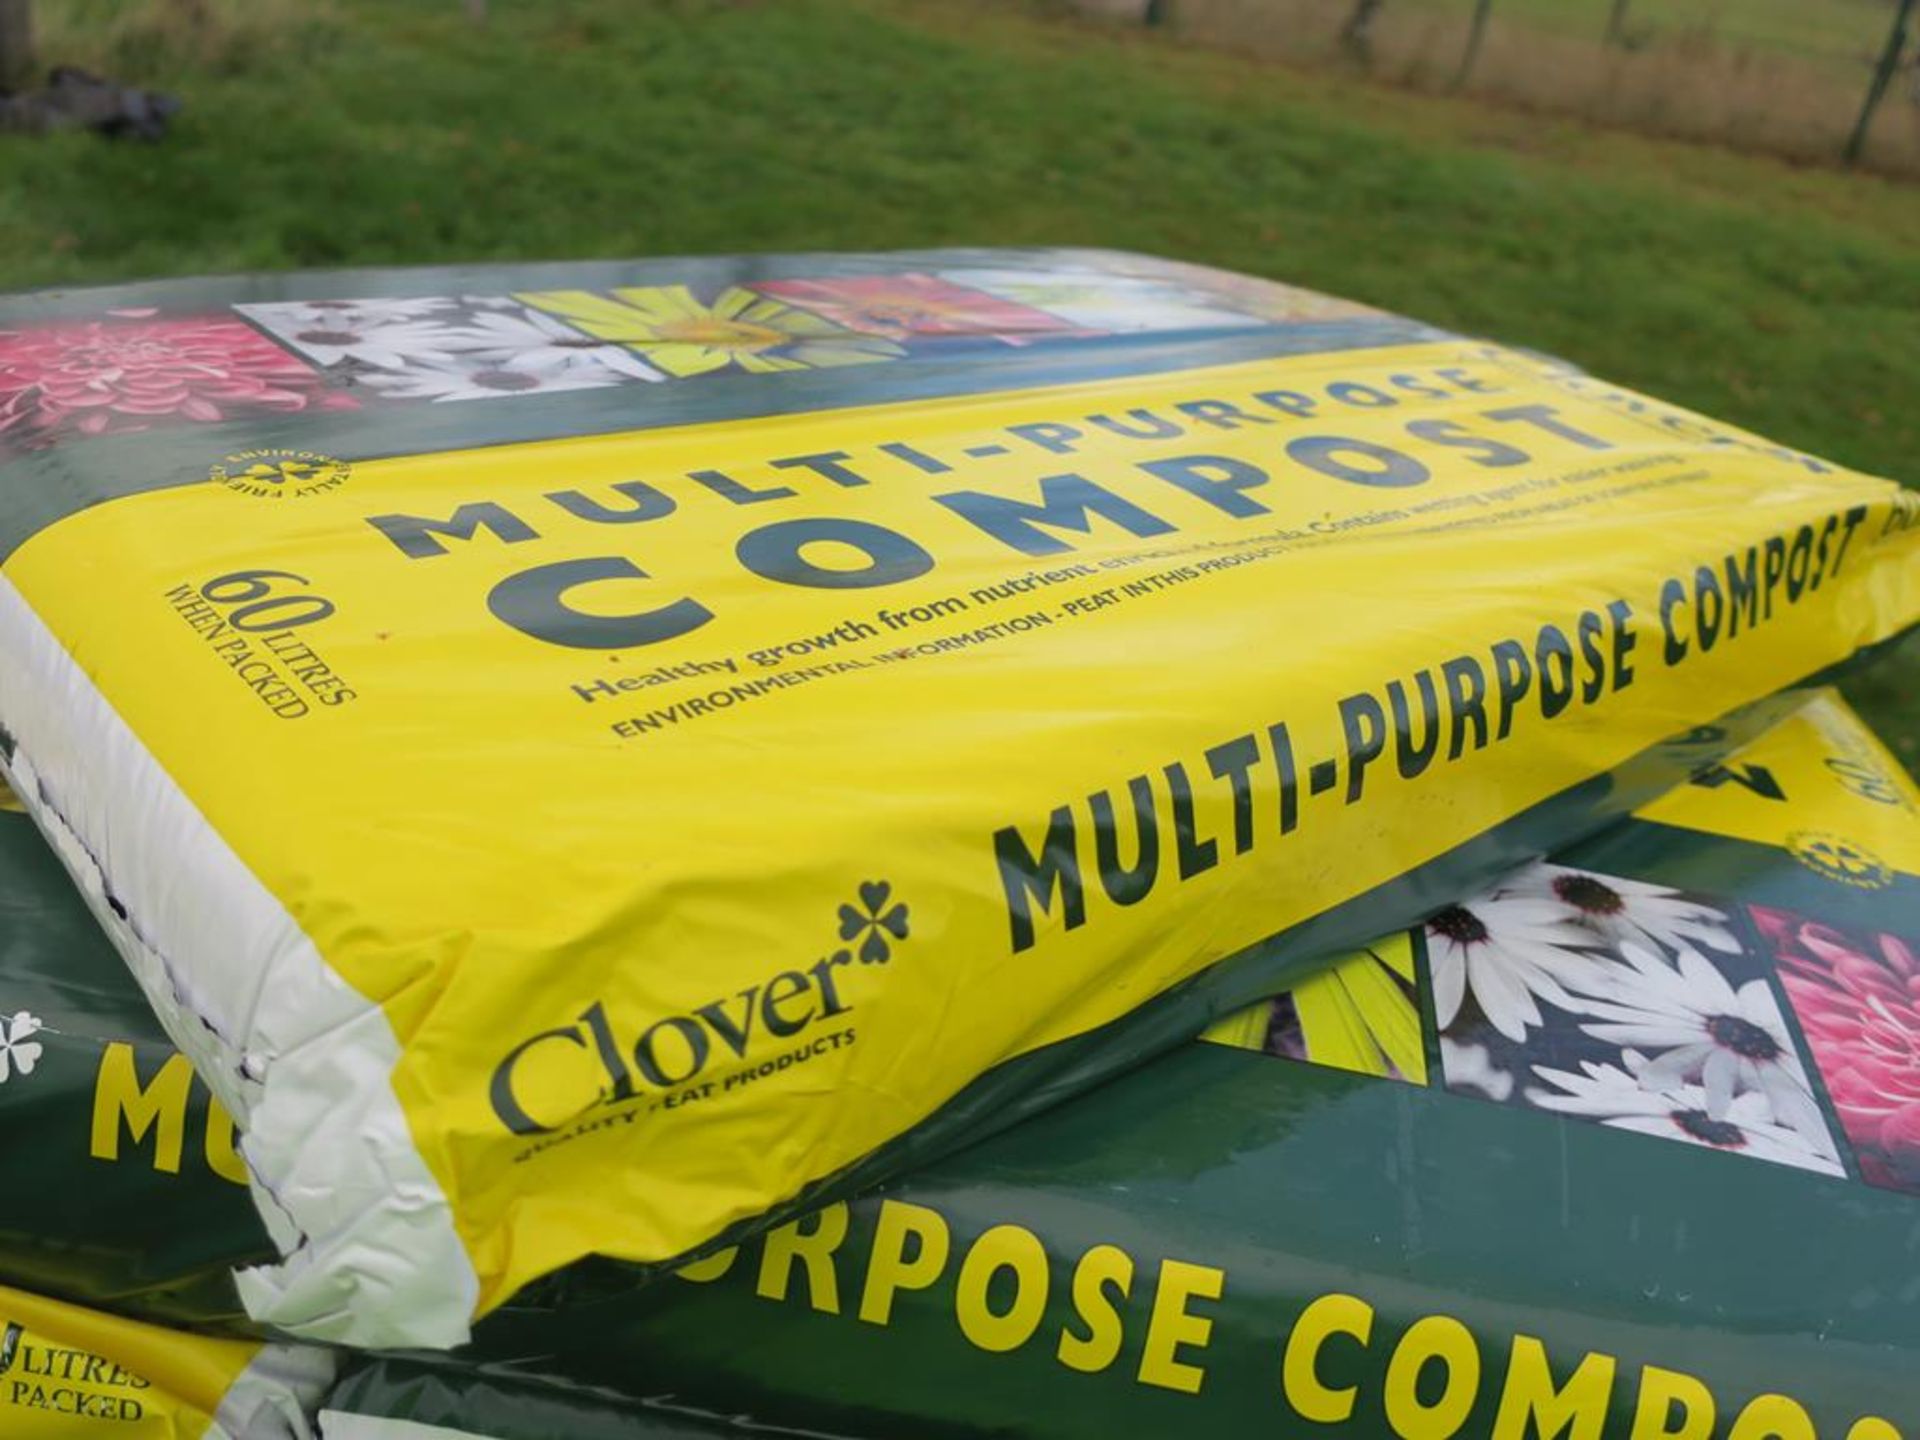 * 10 bags of Clover Multipurpose Compost (60L bag)